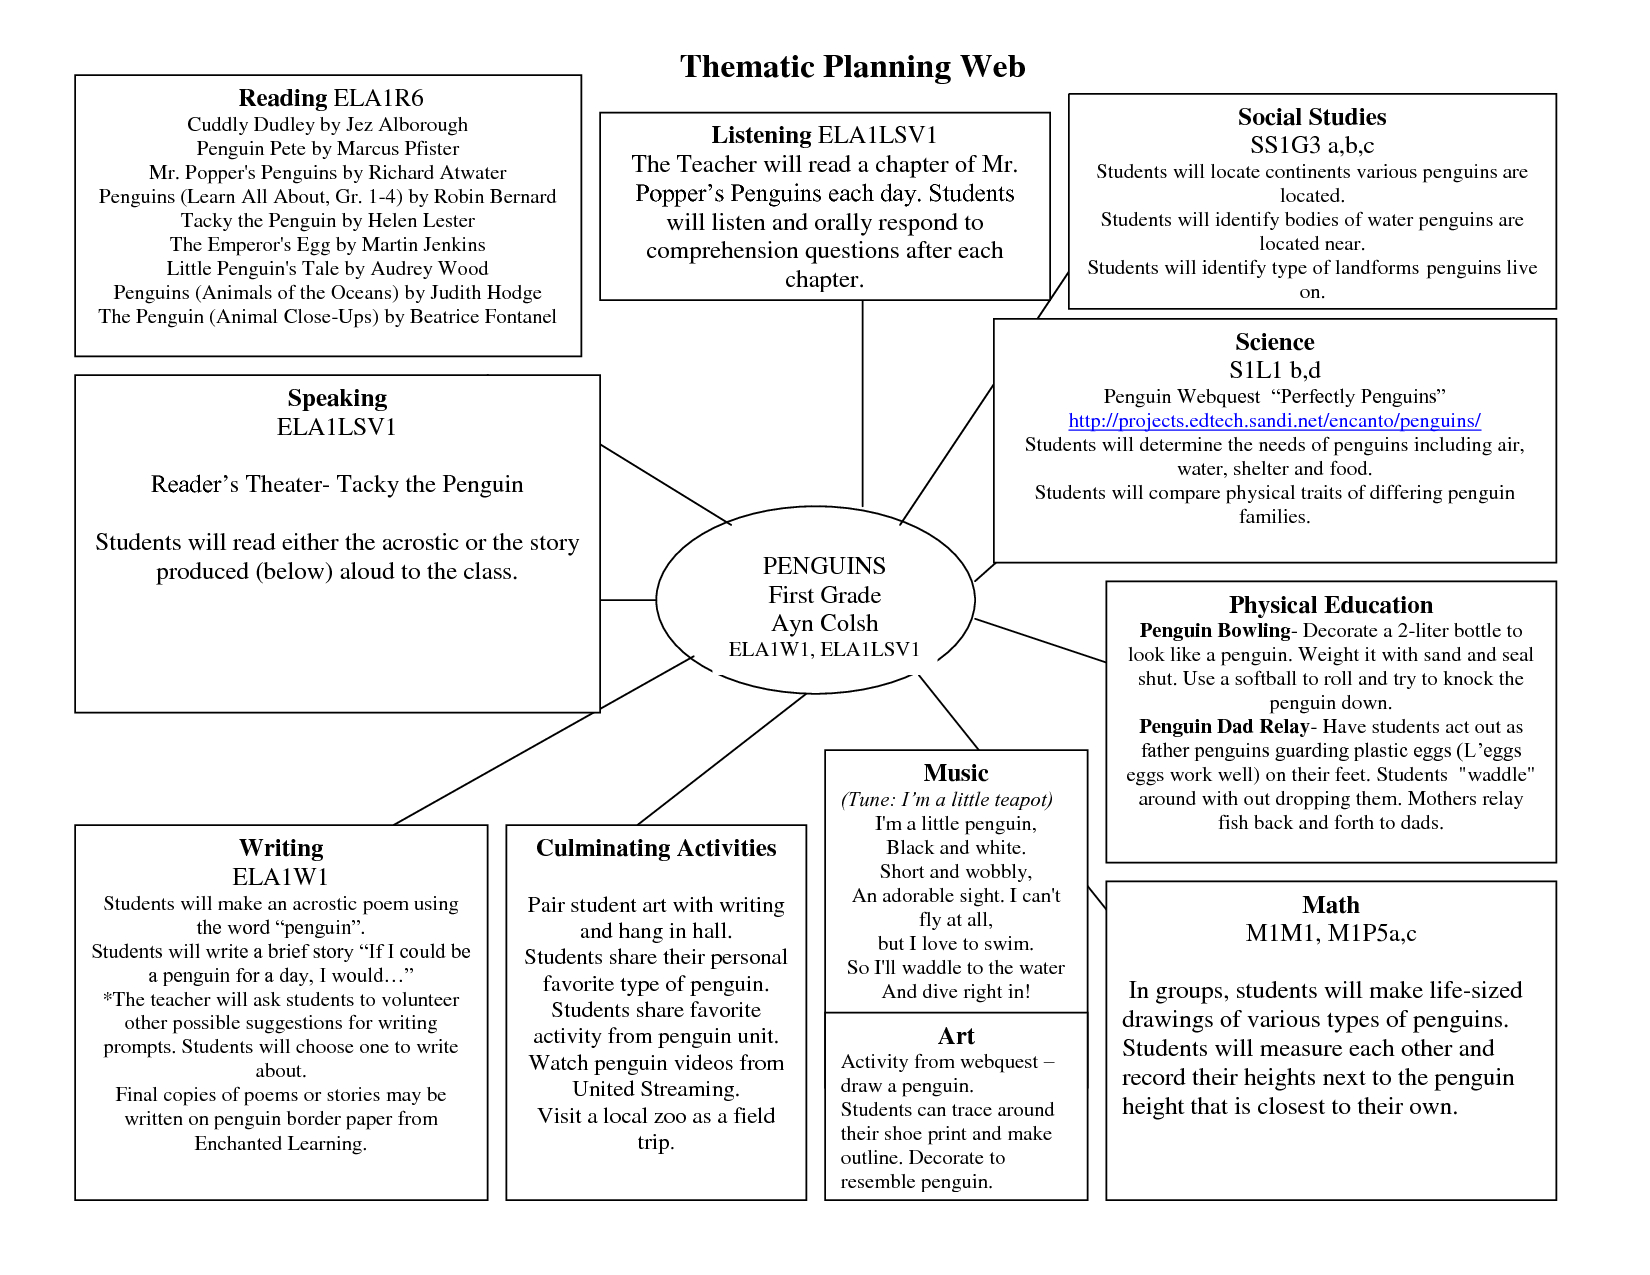 Planning Web Template | Penguins Thematic Web - Littleil